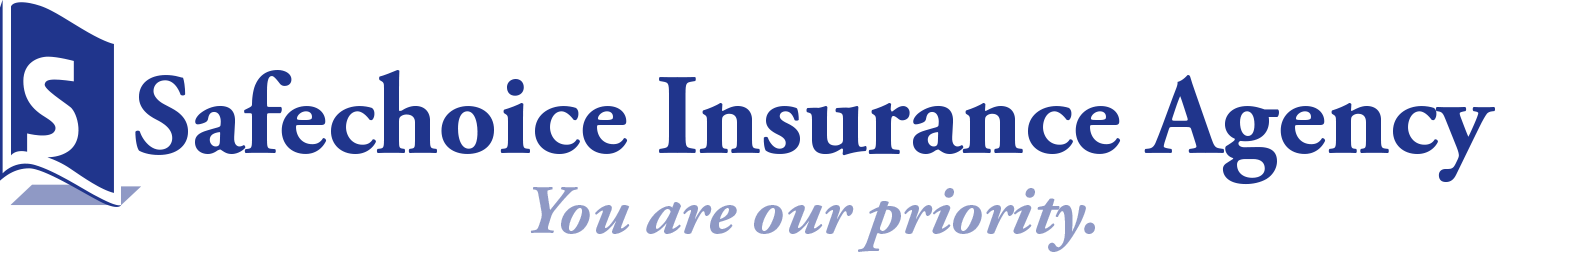 Safechoice Insurance Agency logo